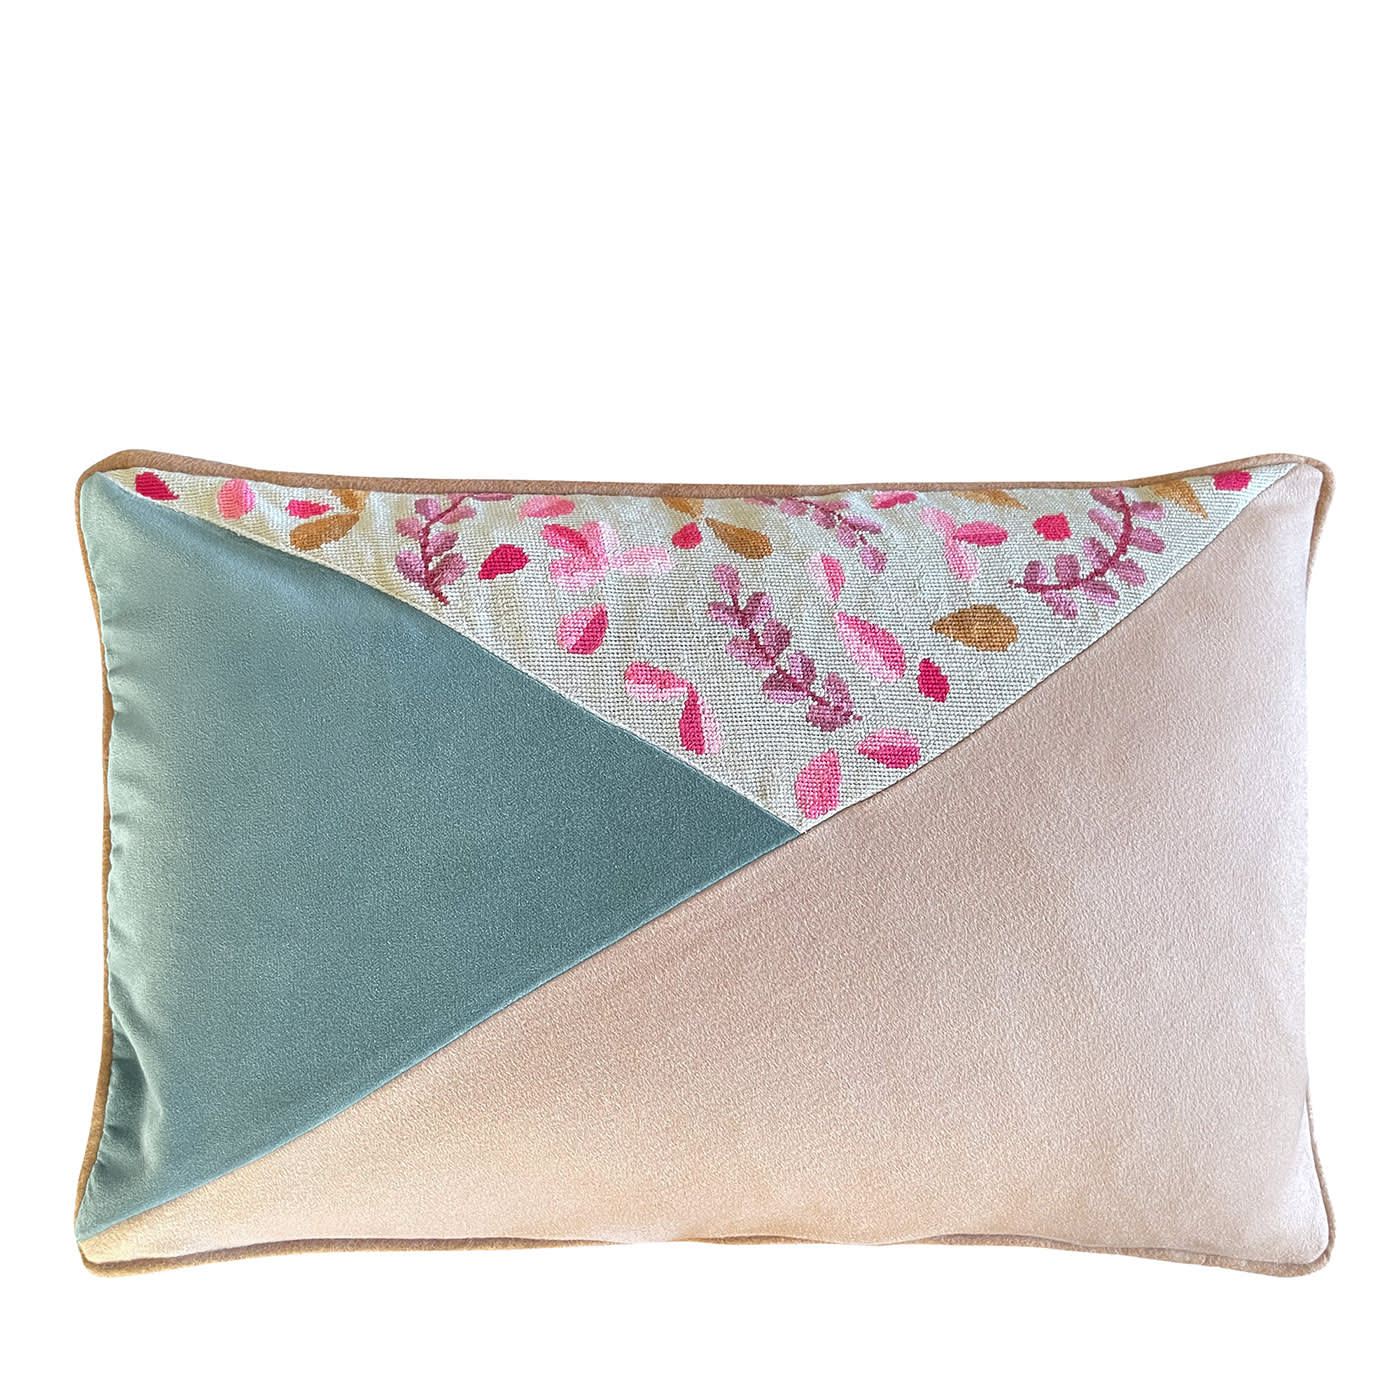 Envelope Design with 3 Fabrics Hand-Embroidered rectangular cushion - Midsummer Milano